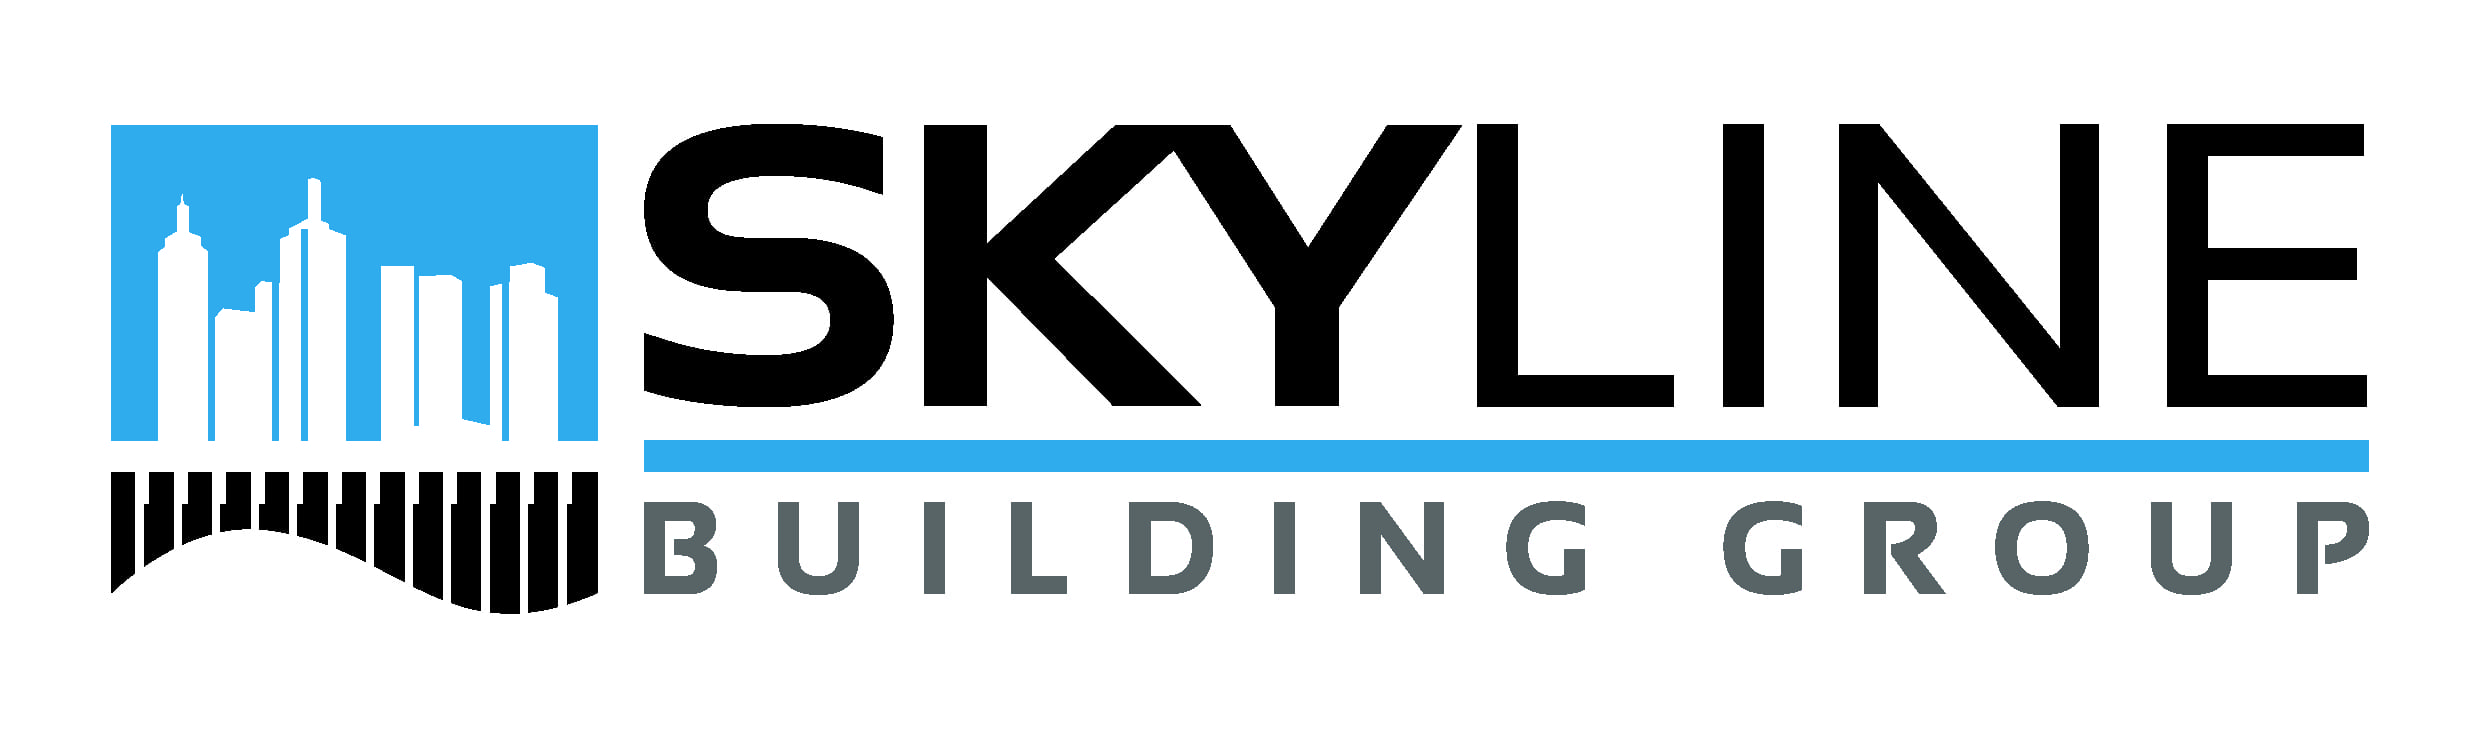 Skyline Building Group